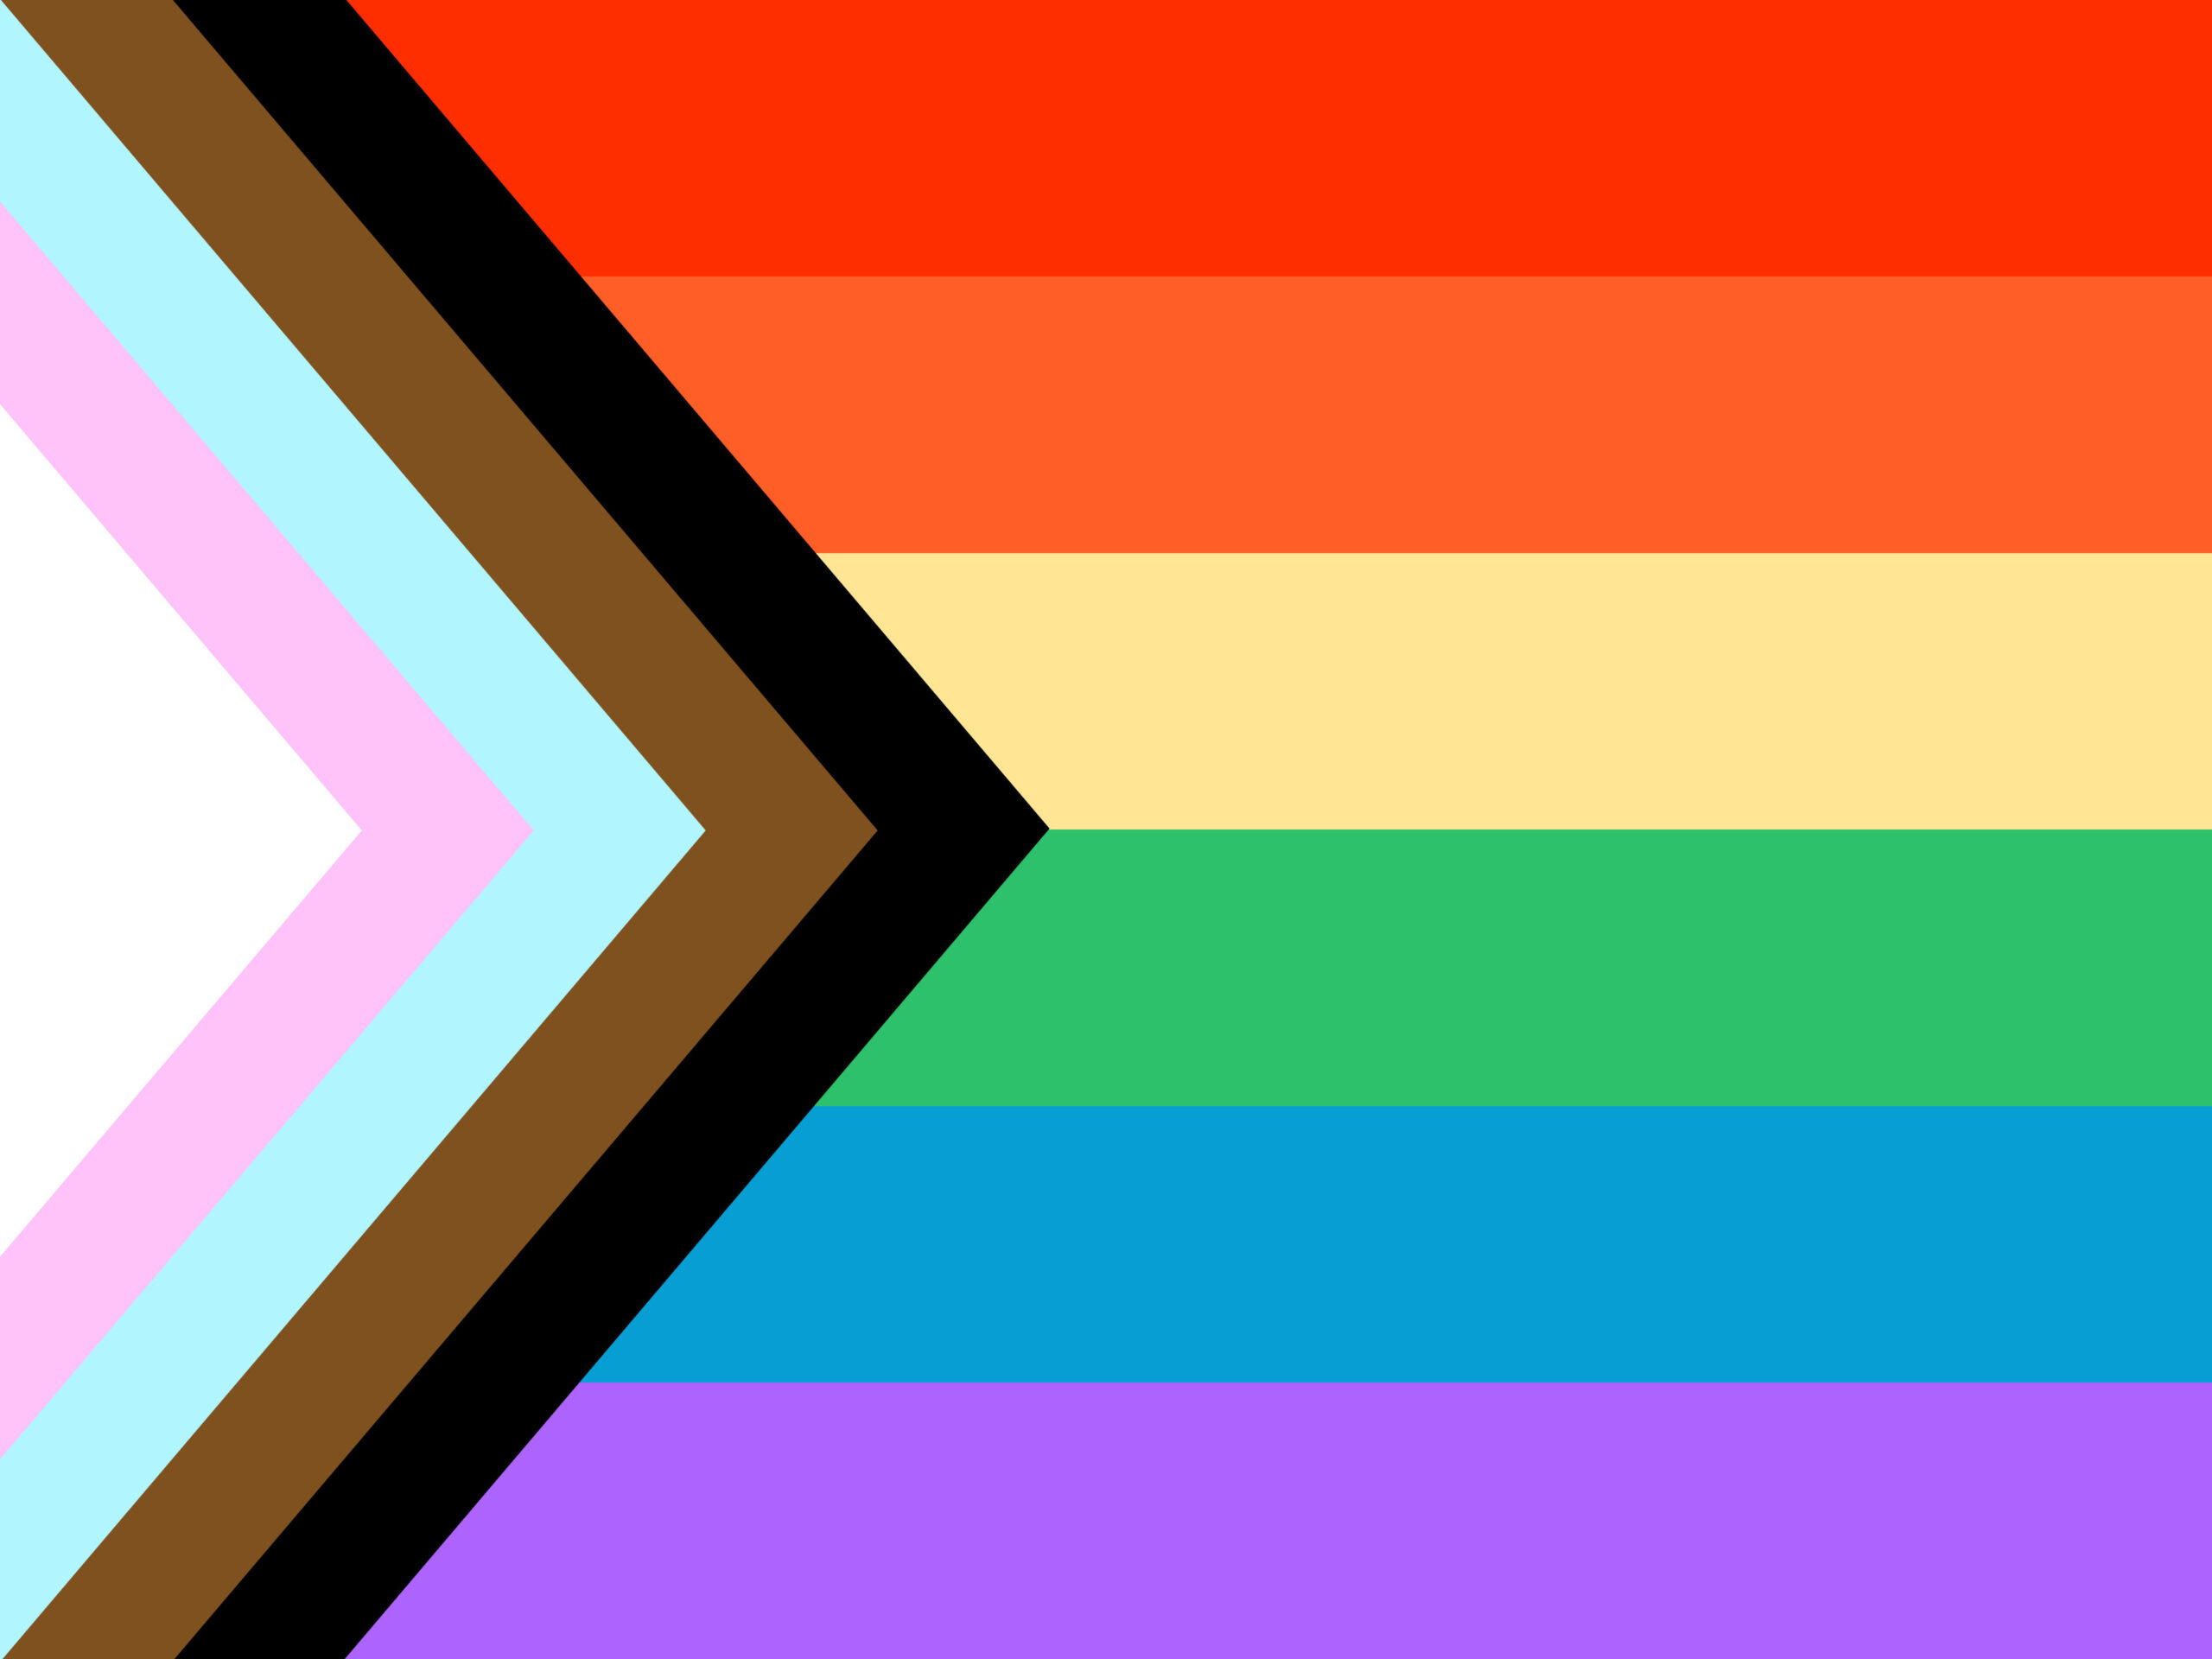 A colorful digital Pride flag